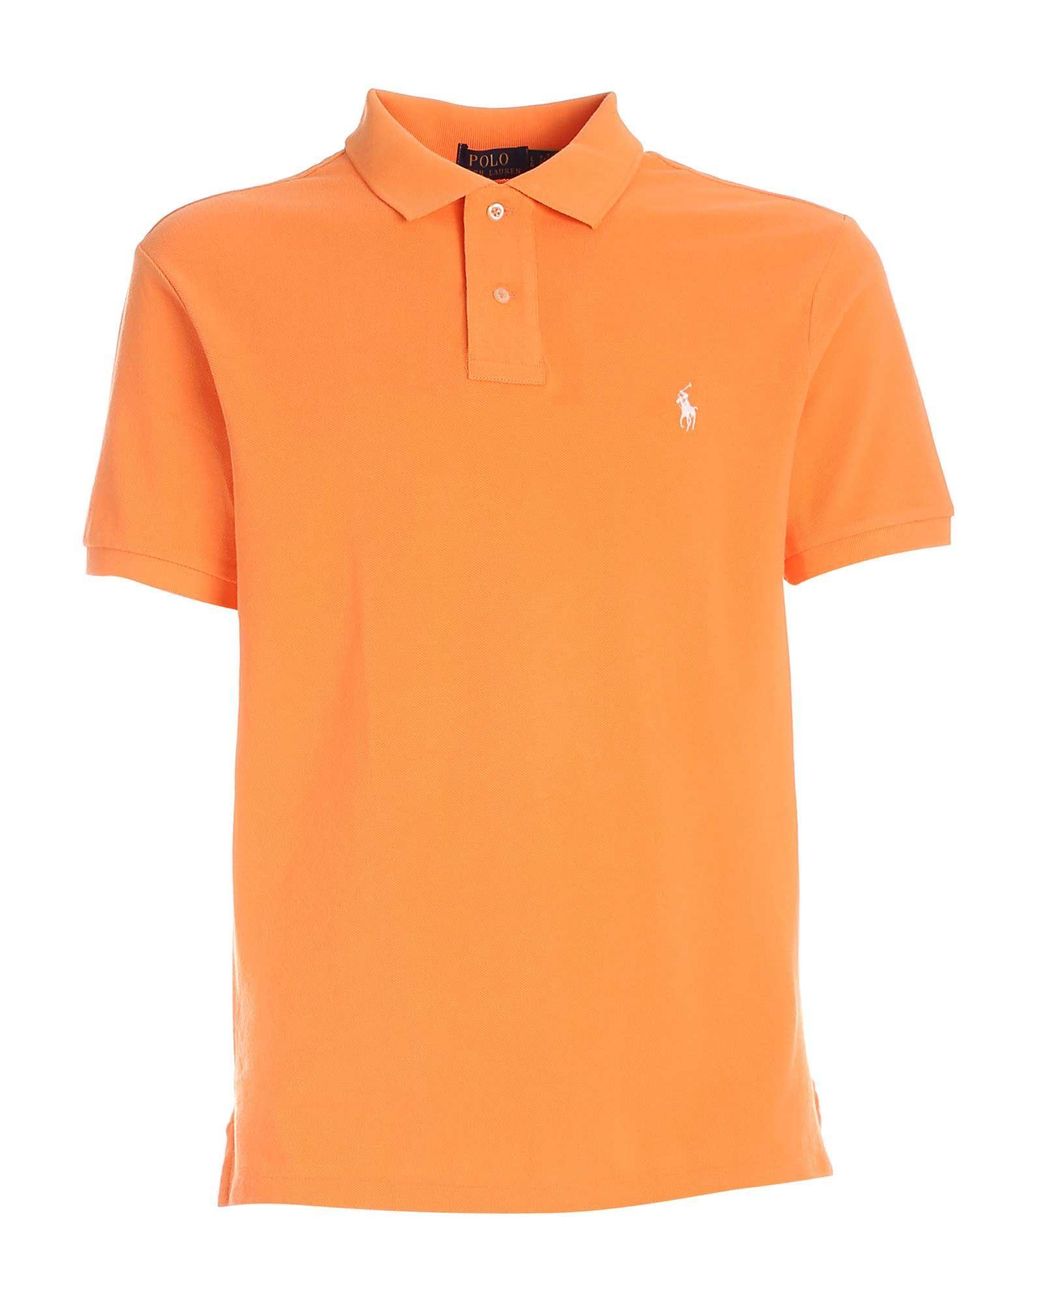 Polo Ralph Lauren Cotton Logo Slim-fit Polo Shirt in Orange for Men - Lyst